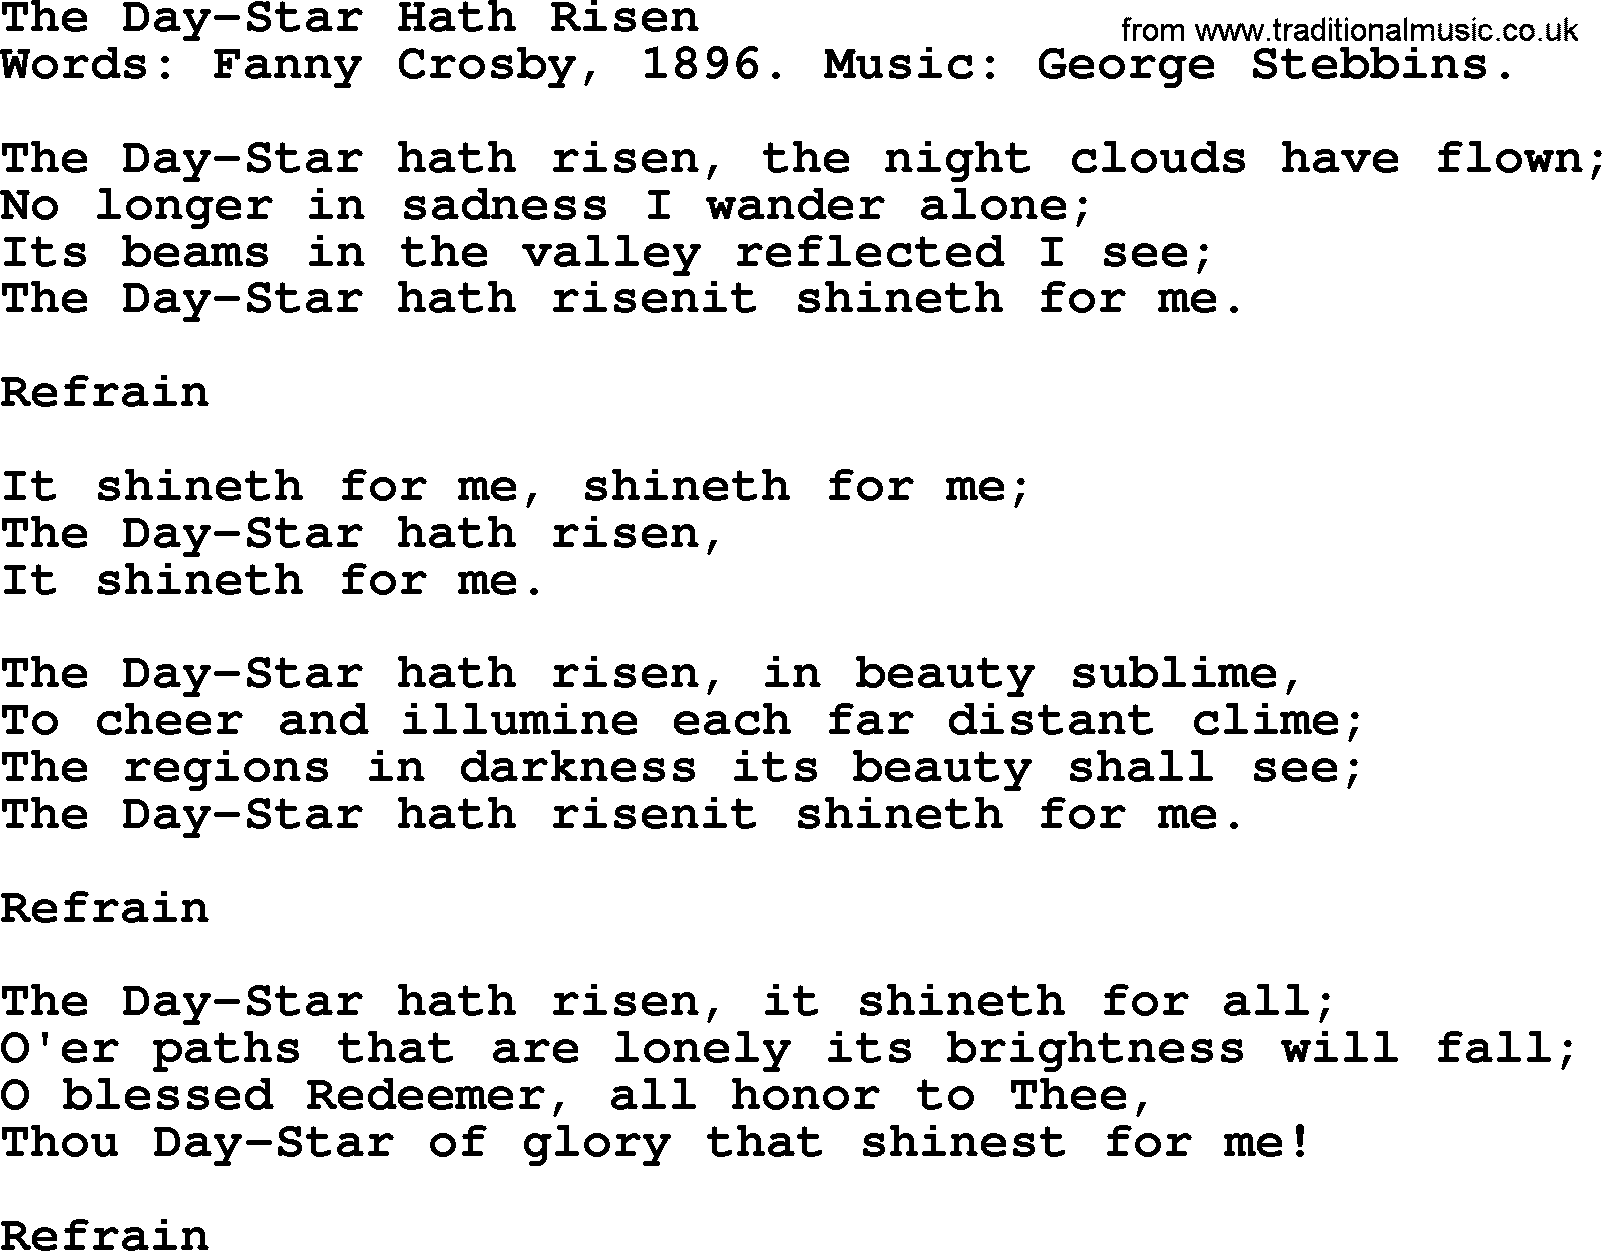 Fanny Crosby song: The Day-Star Hath Risen, lyrics